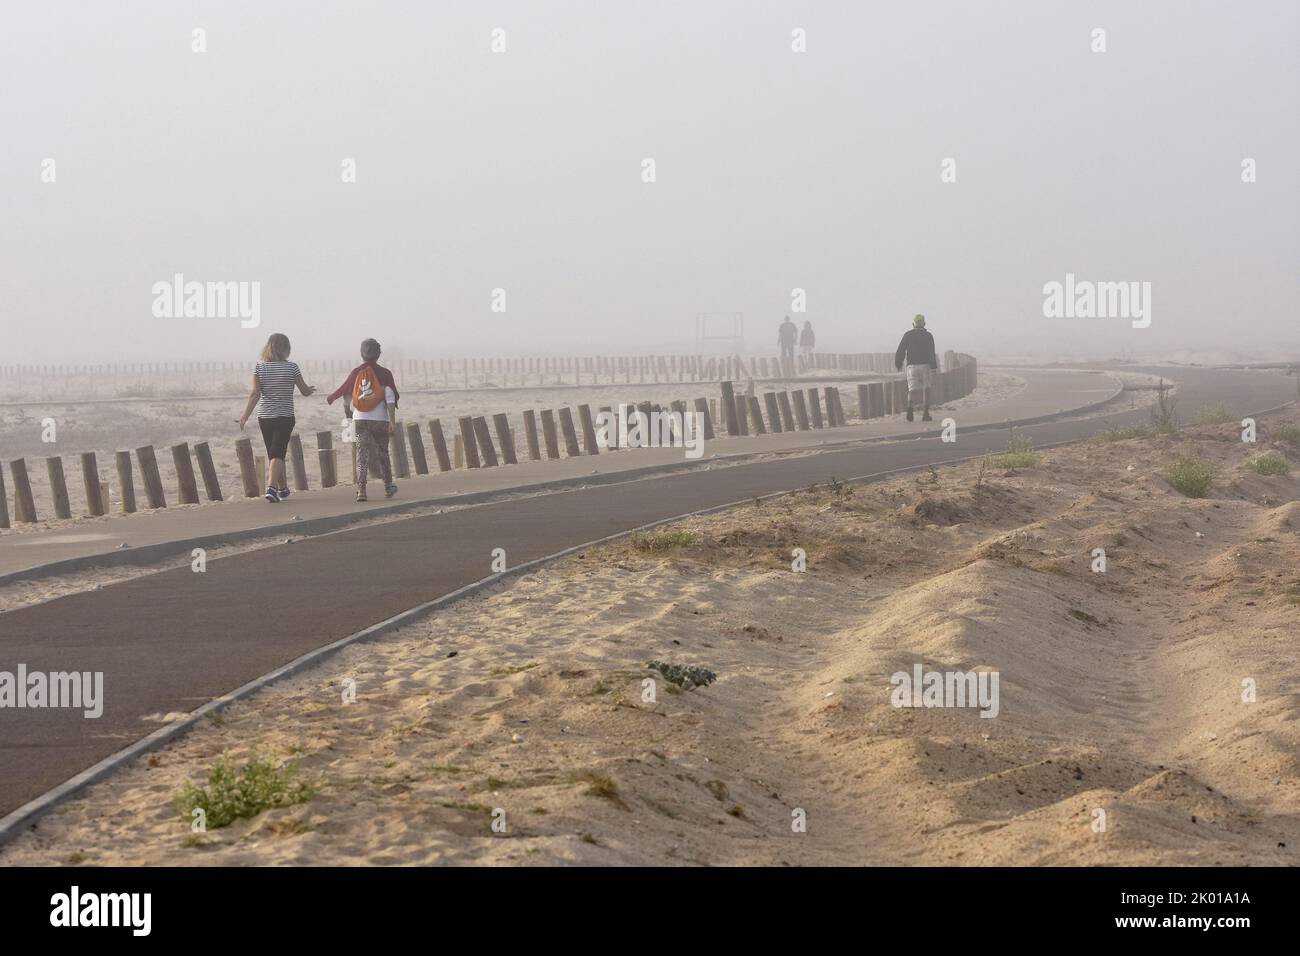 People walking in morning fog, Figueira da Foz Portugal. Stock Photo